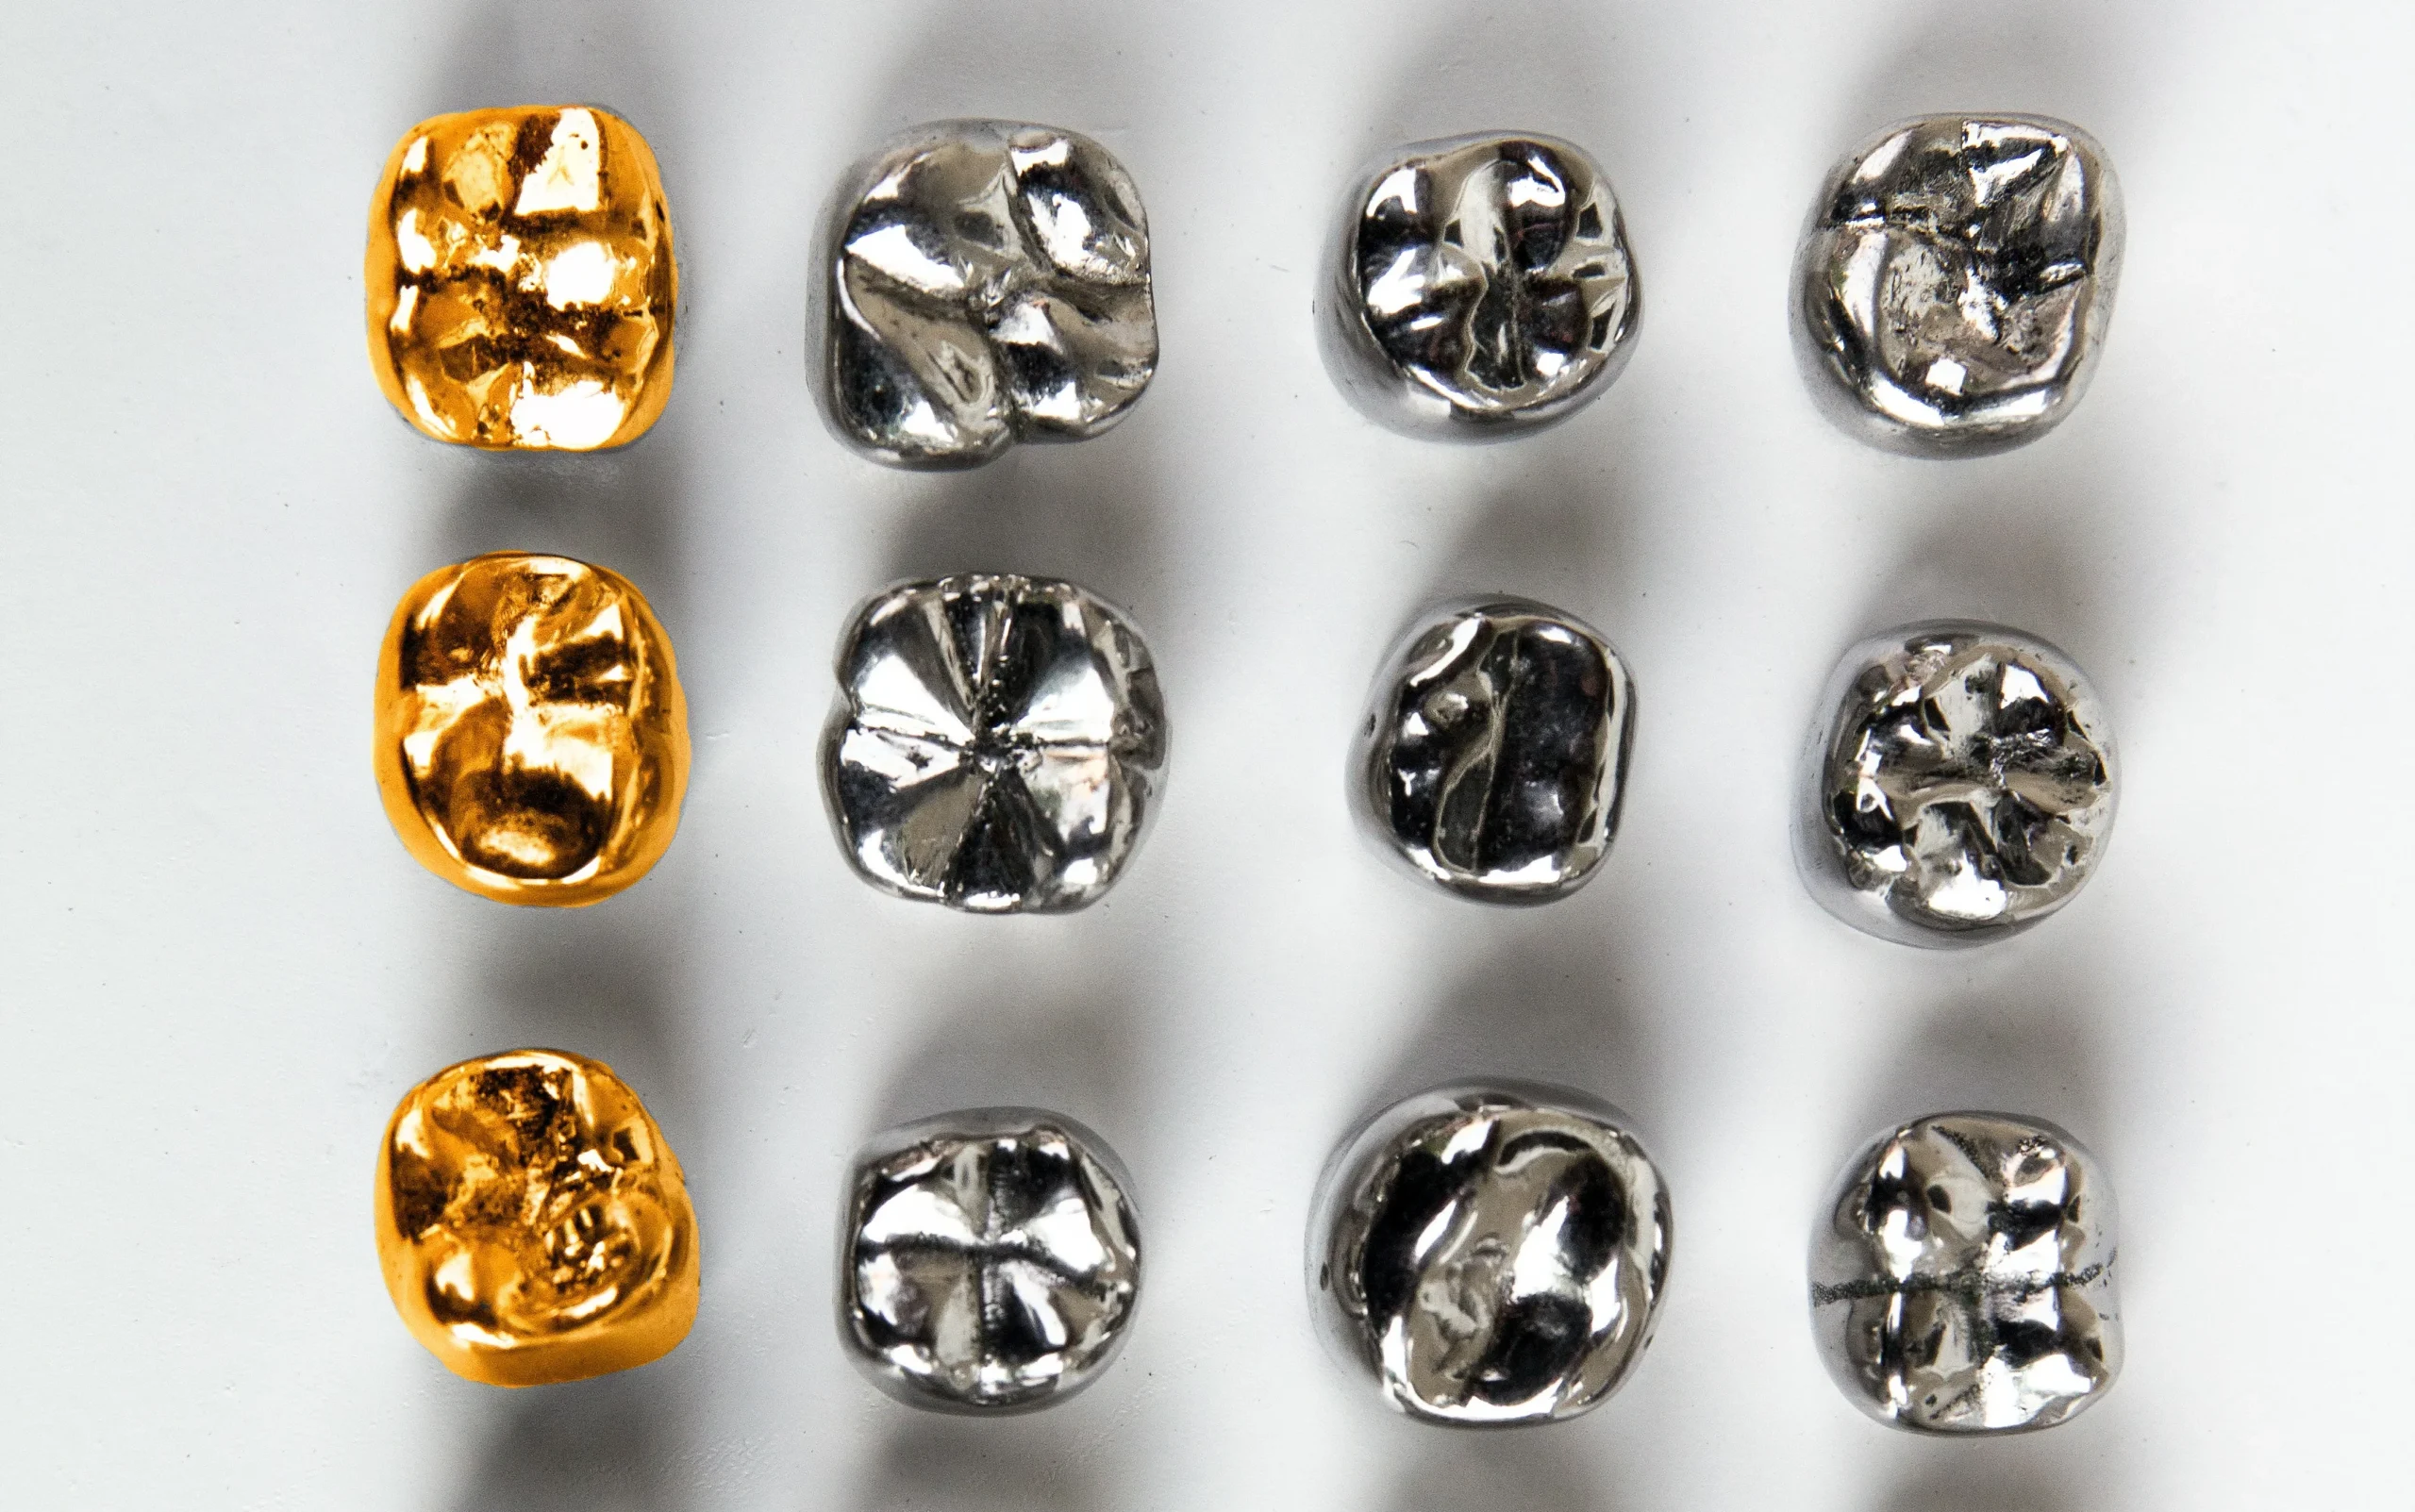 4 rows of 4 precious metal dental crowns